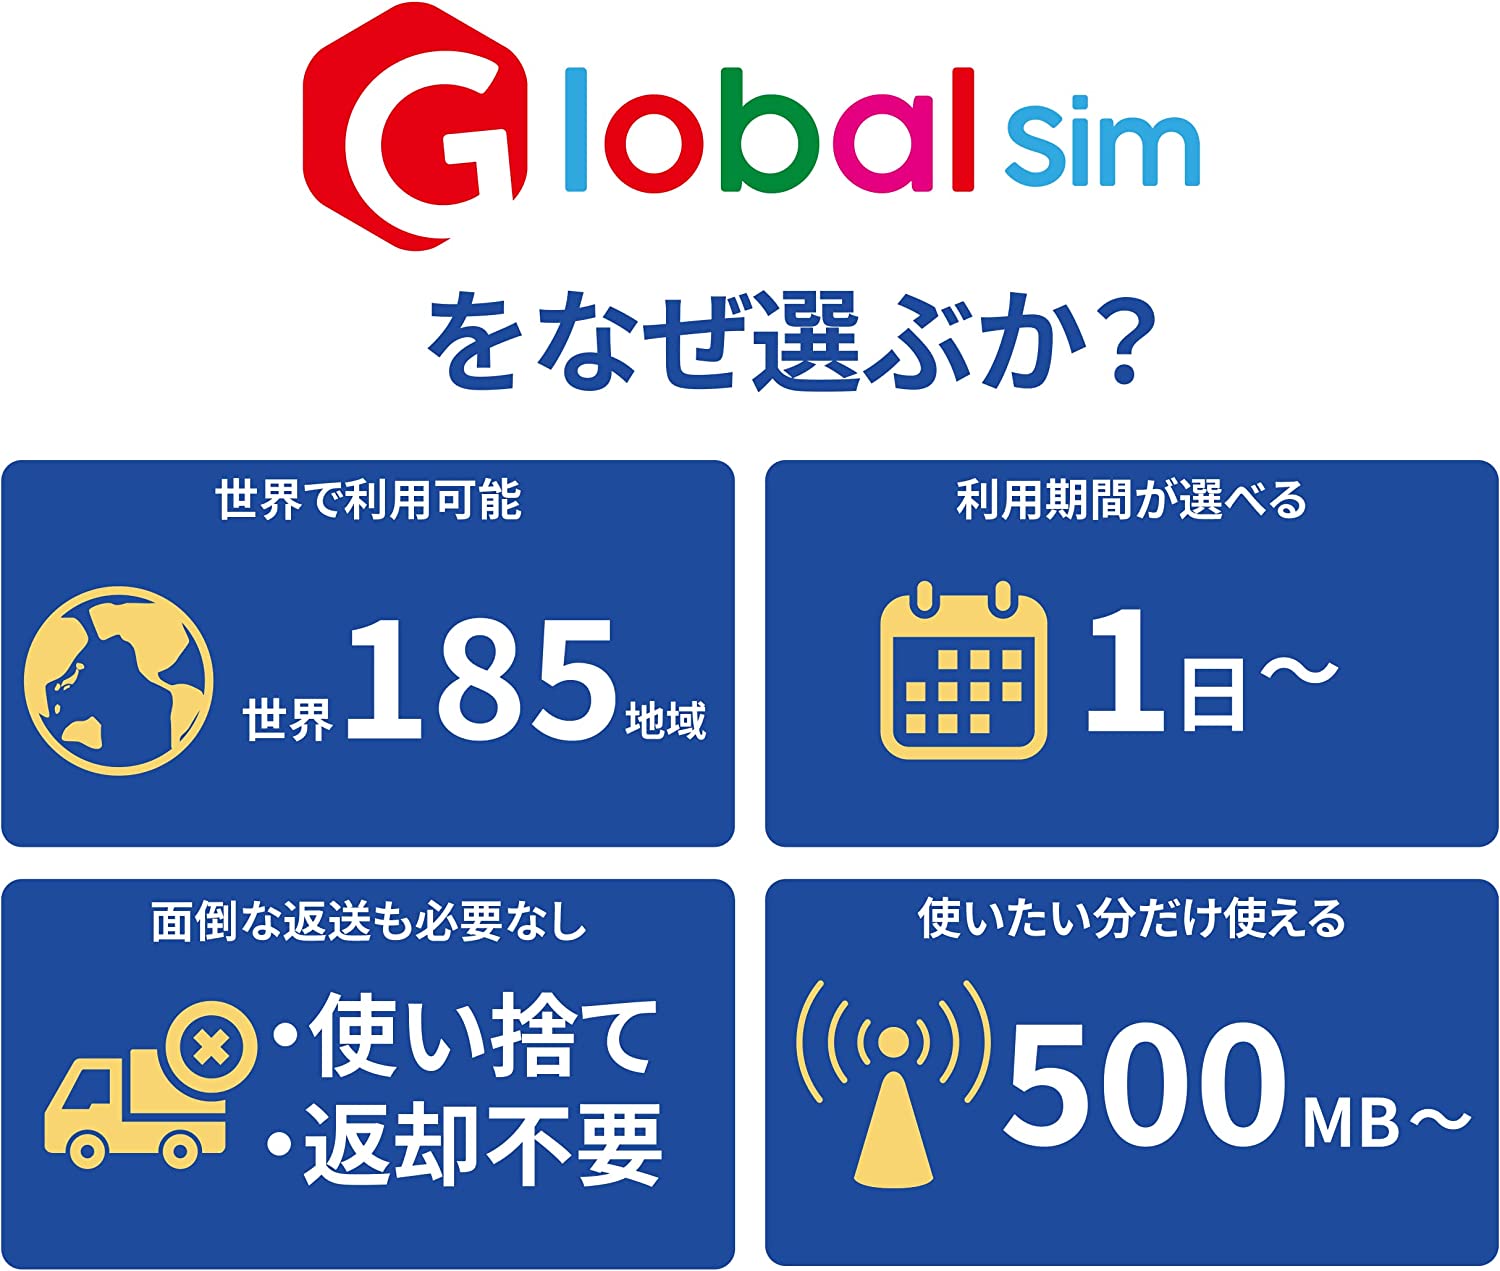 GLOBAL SIM タイ バンコク 7日間 3GBデータプラン データ通信専用 シムフリー 端末のみ対応 追加費用なし・契約不要